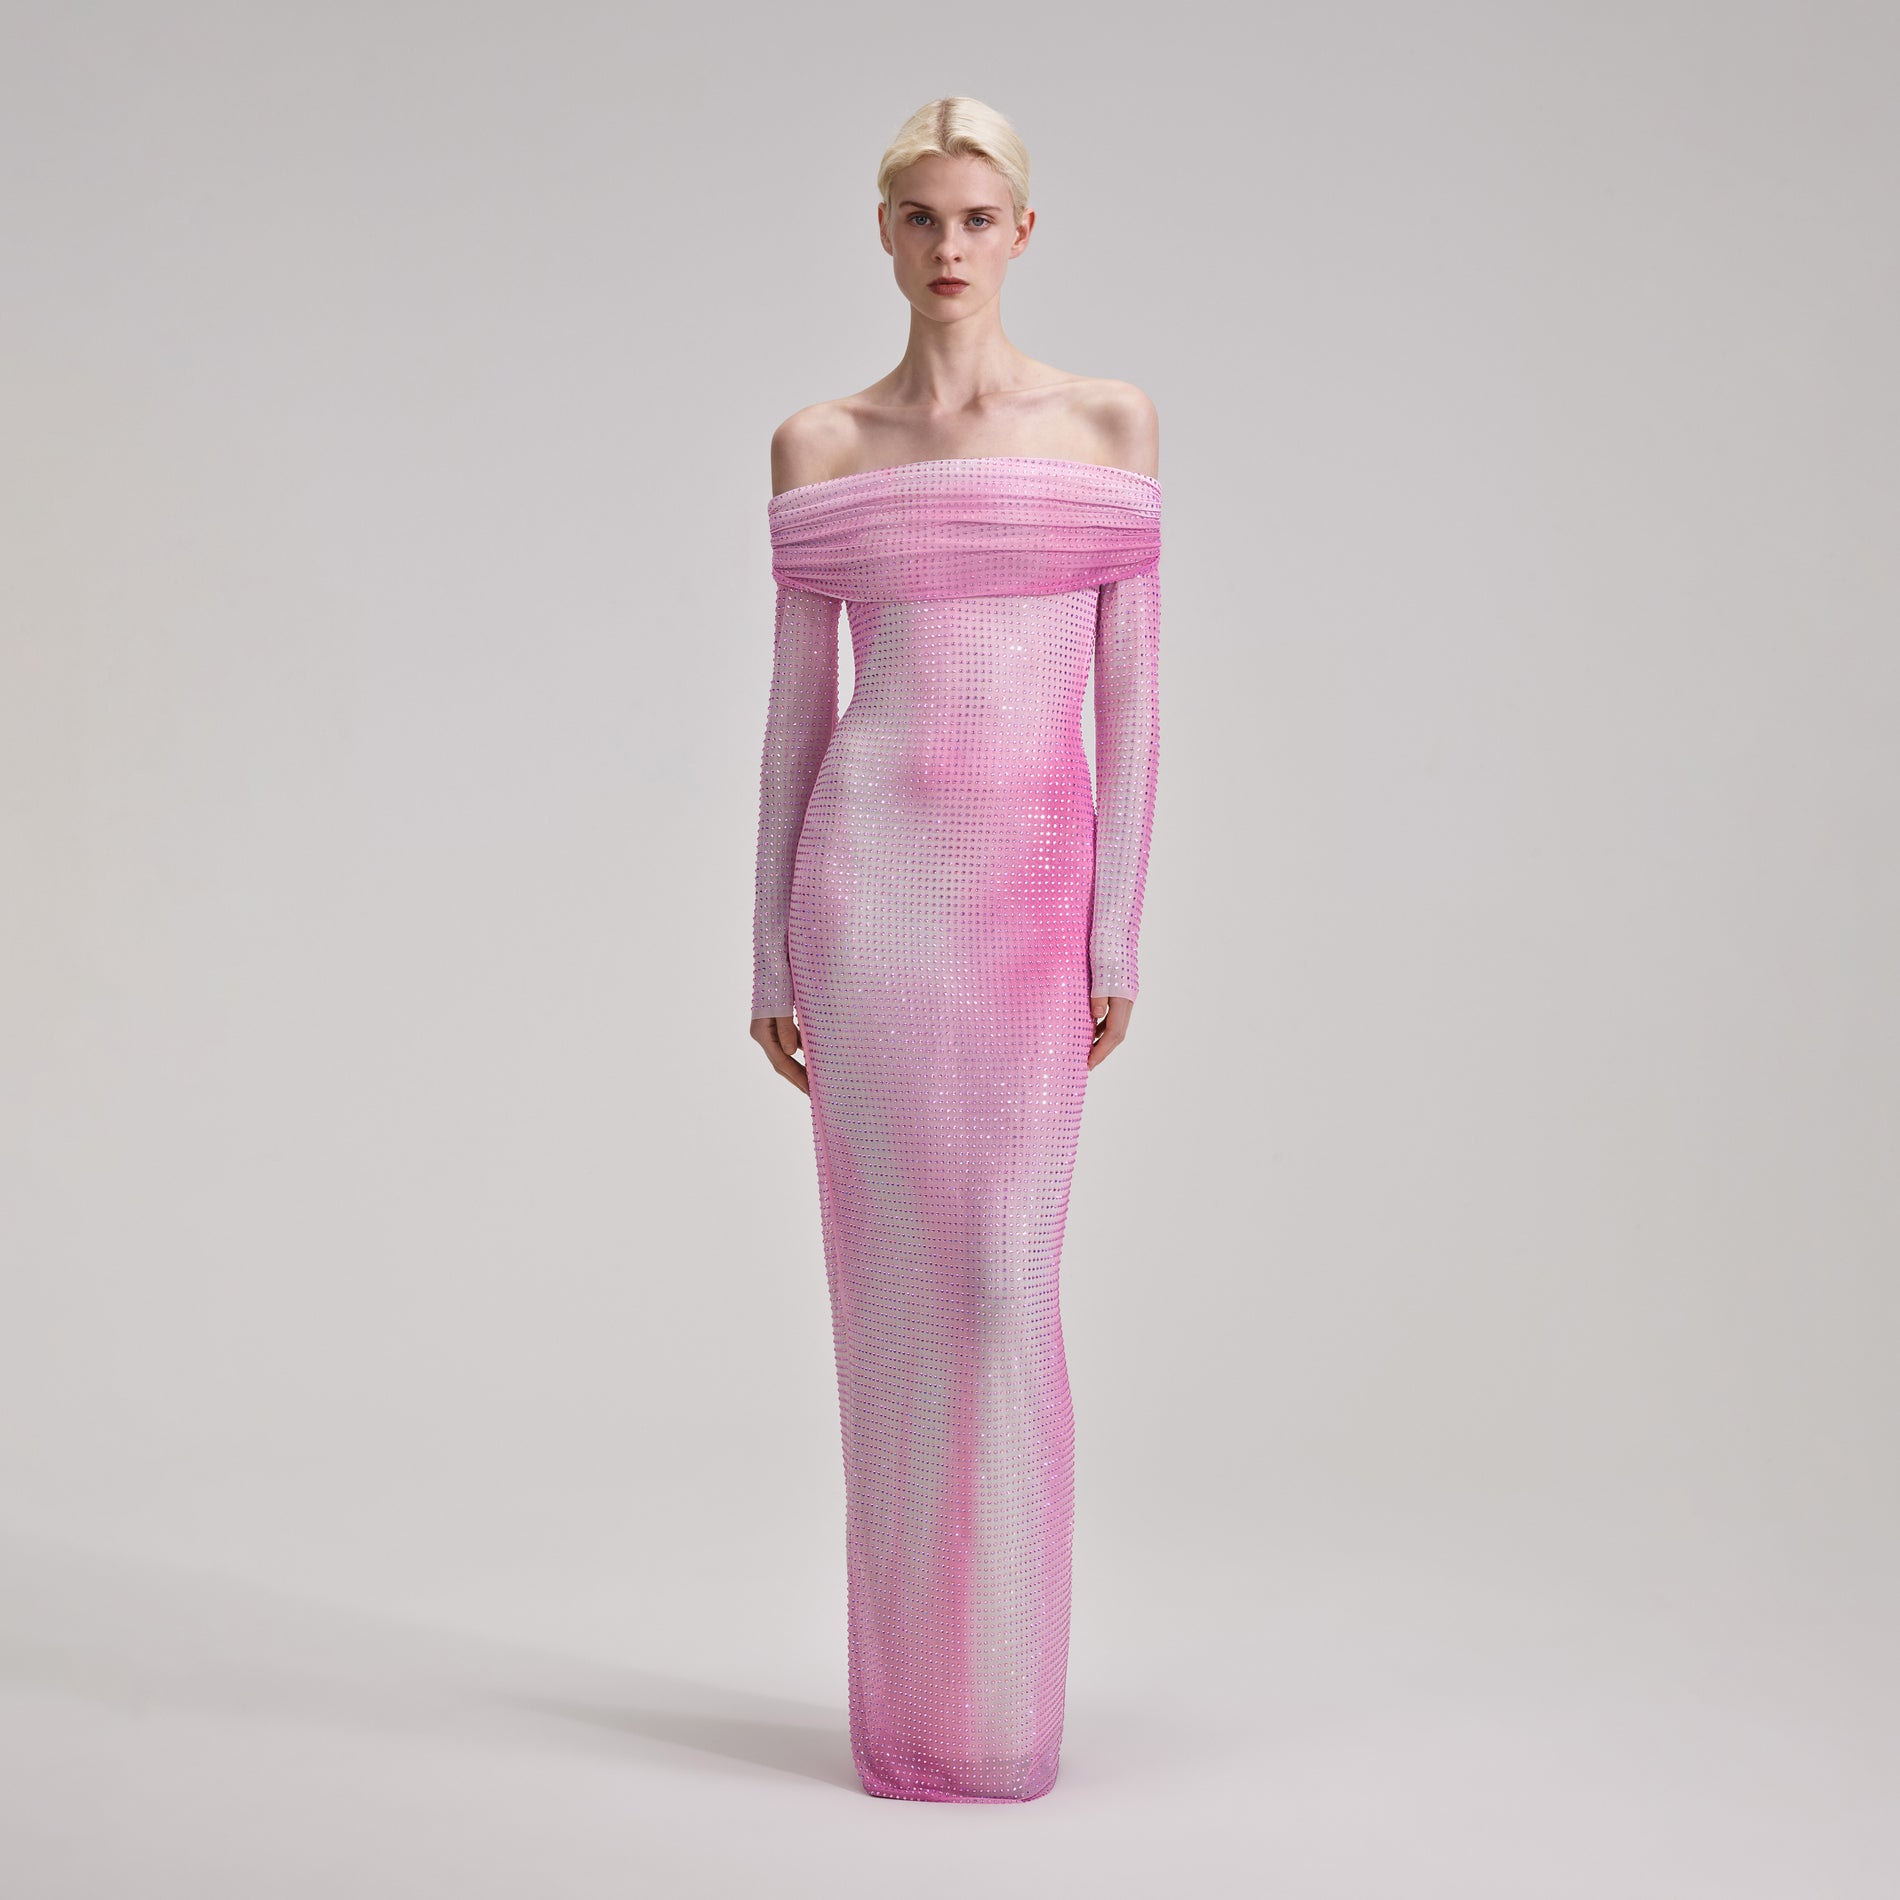 A woman wearing the Pink Contour Print Maxi Dress